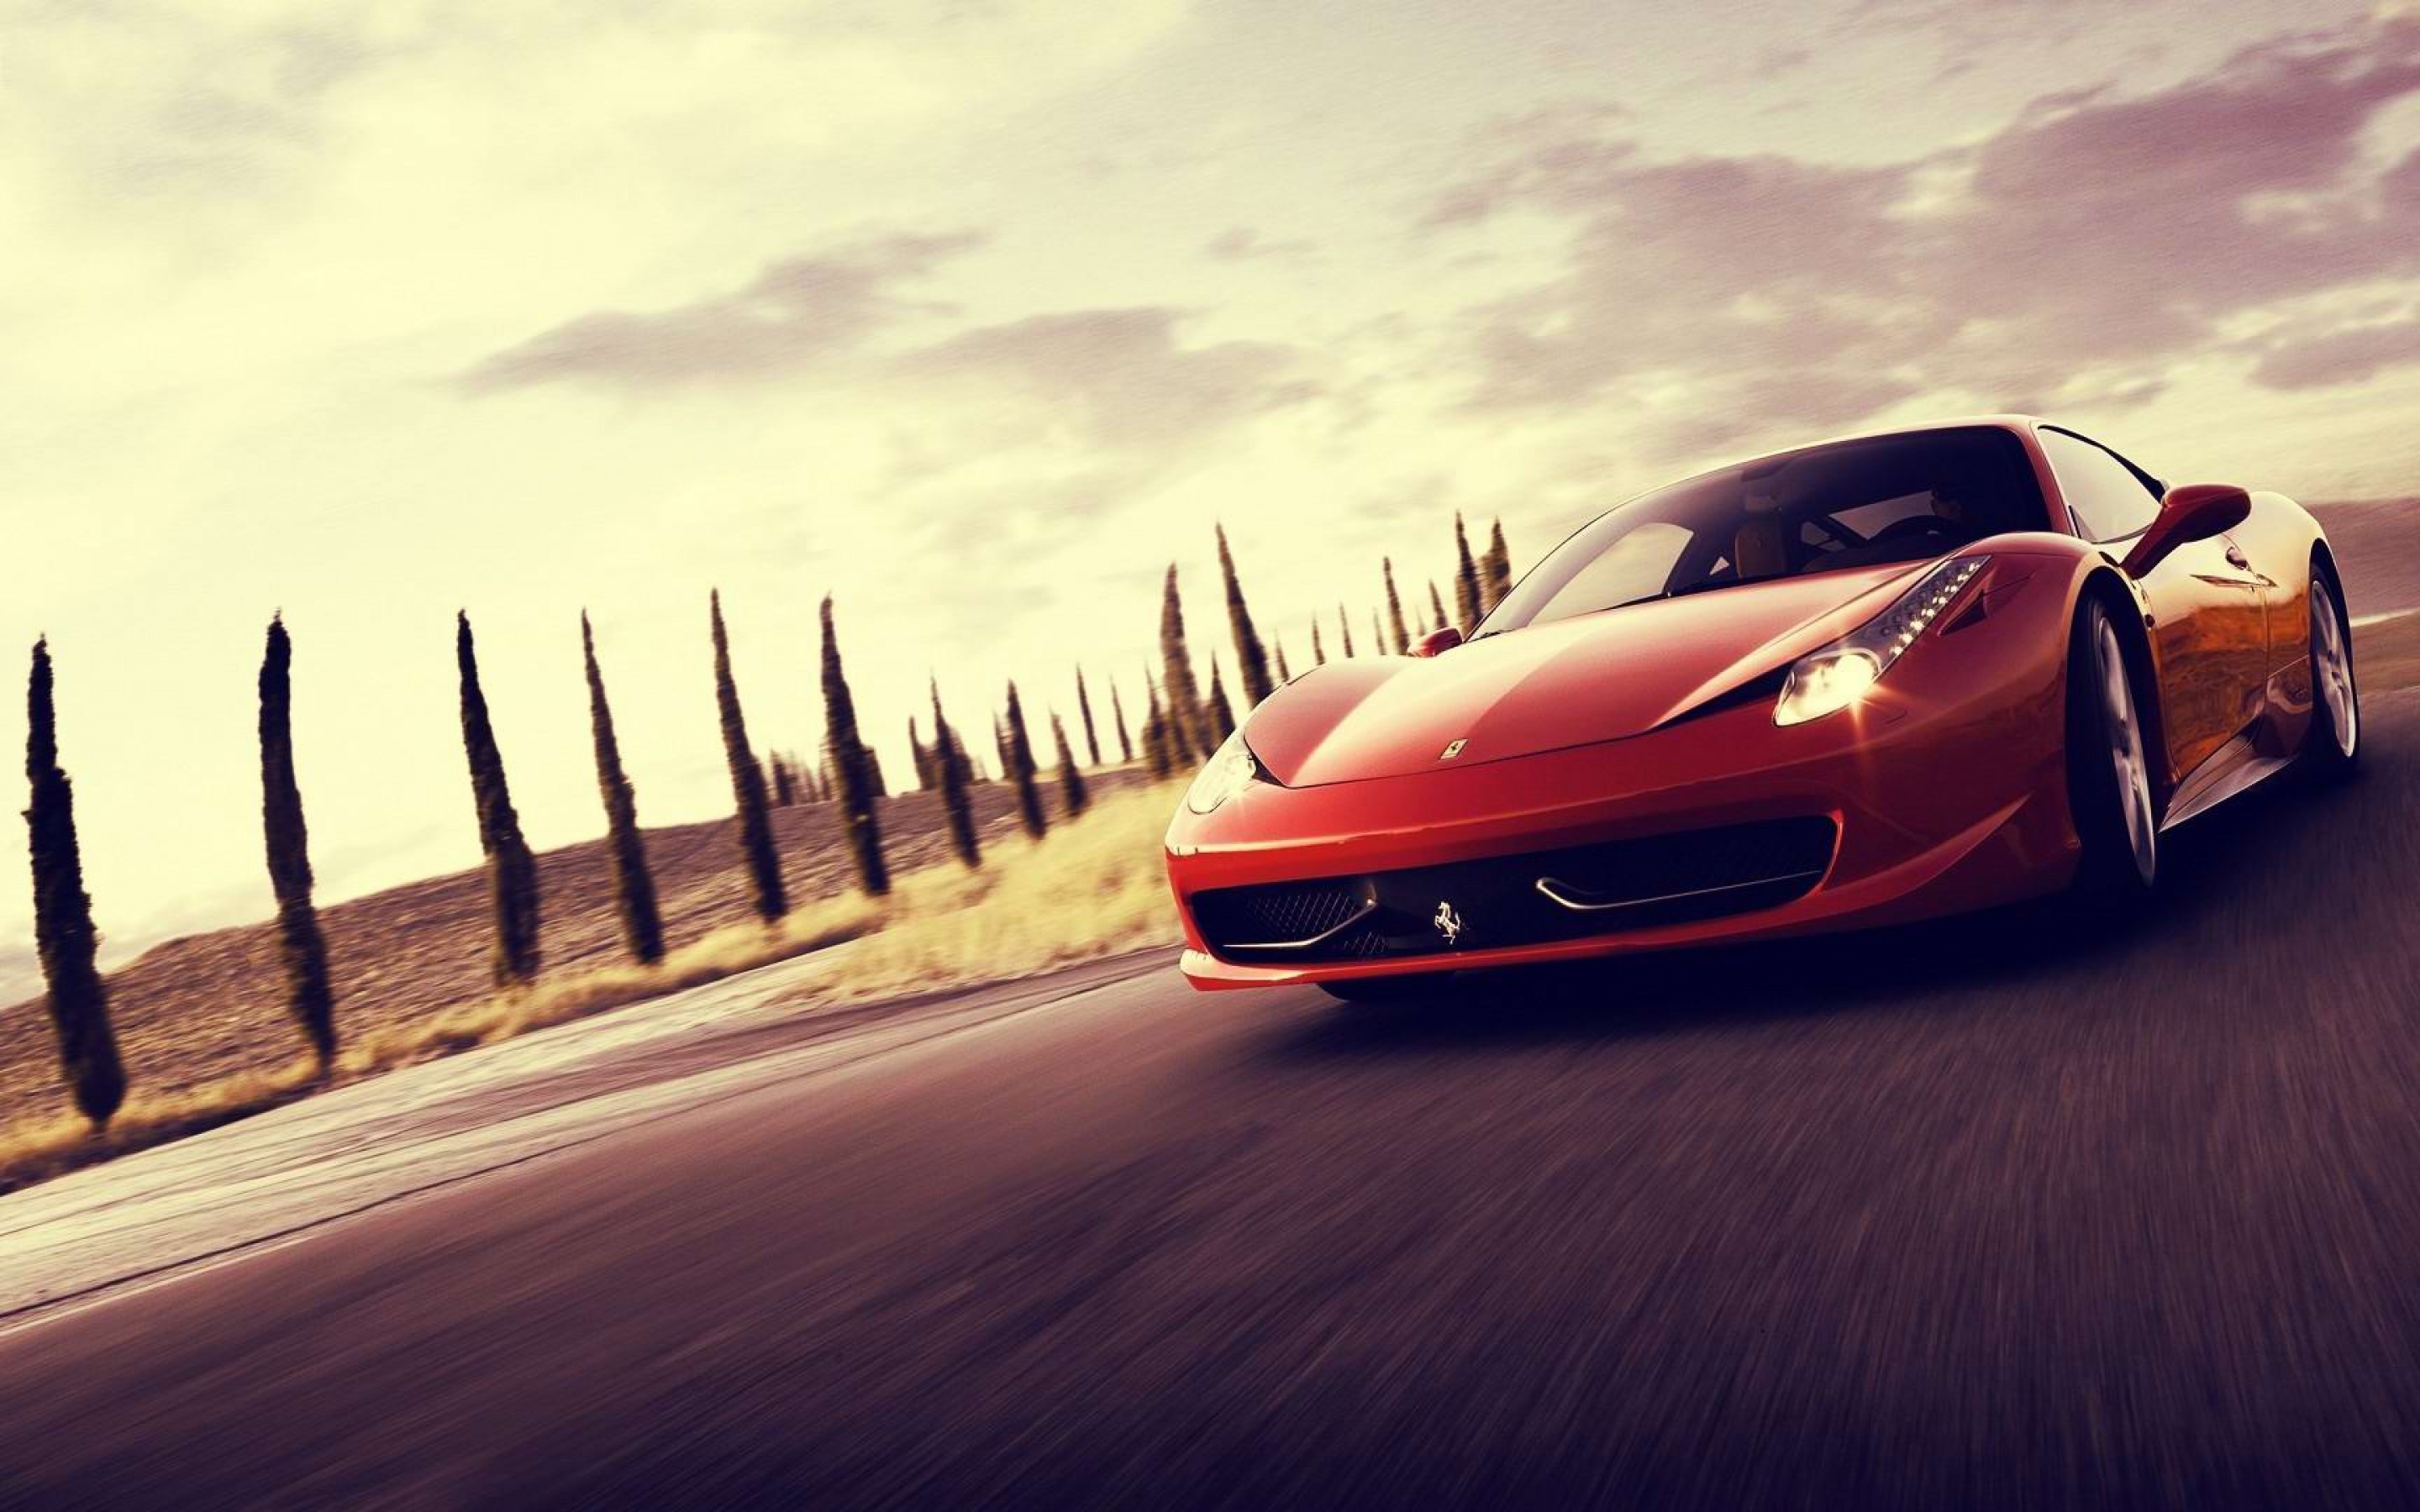 Ferrari 458 Italia HD Wallpaper Background Image 2880x1800 2880x1800